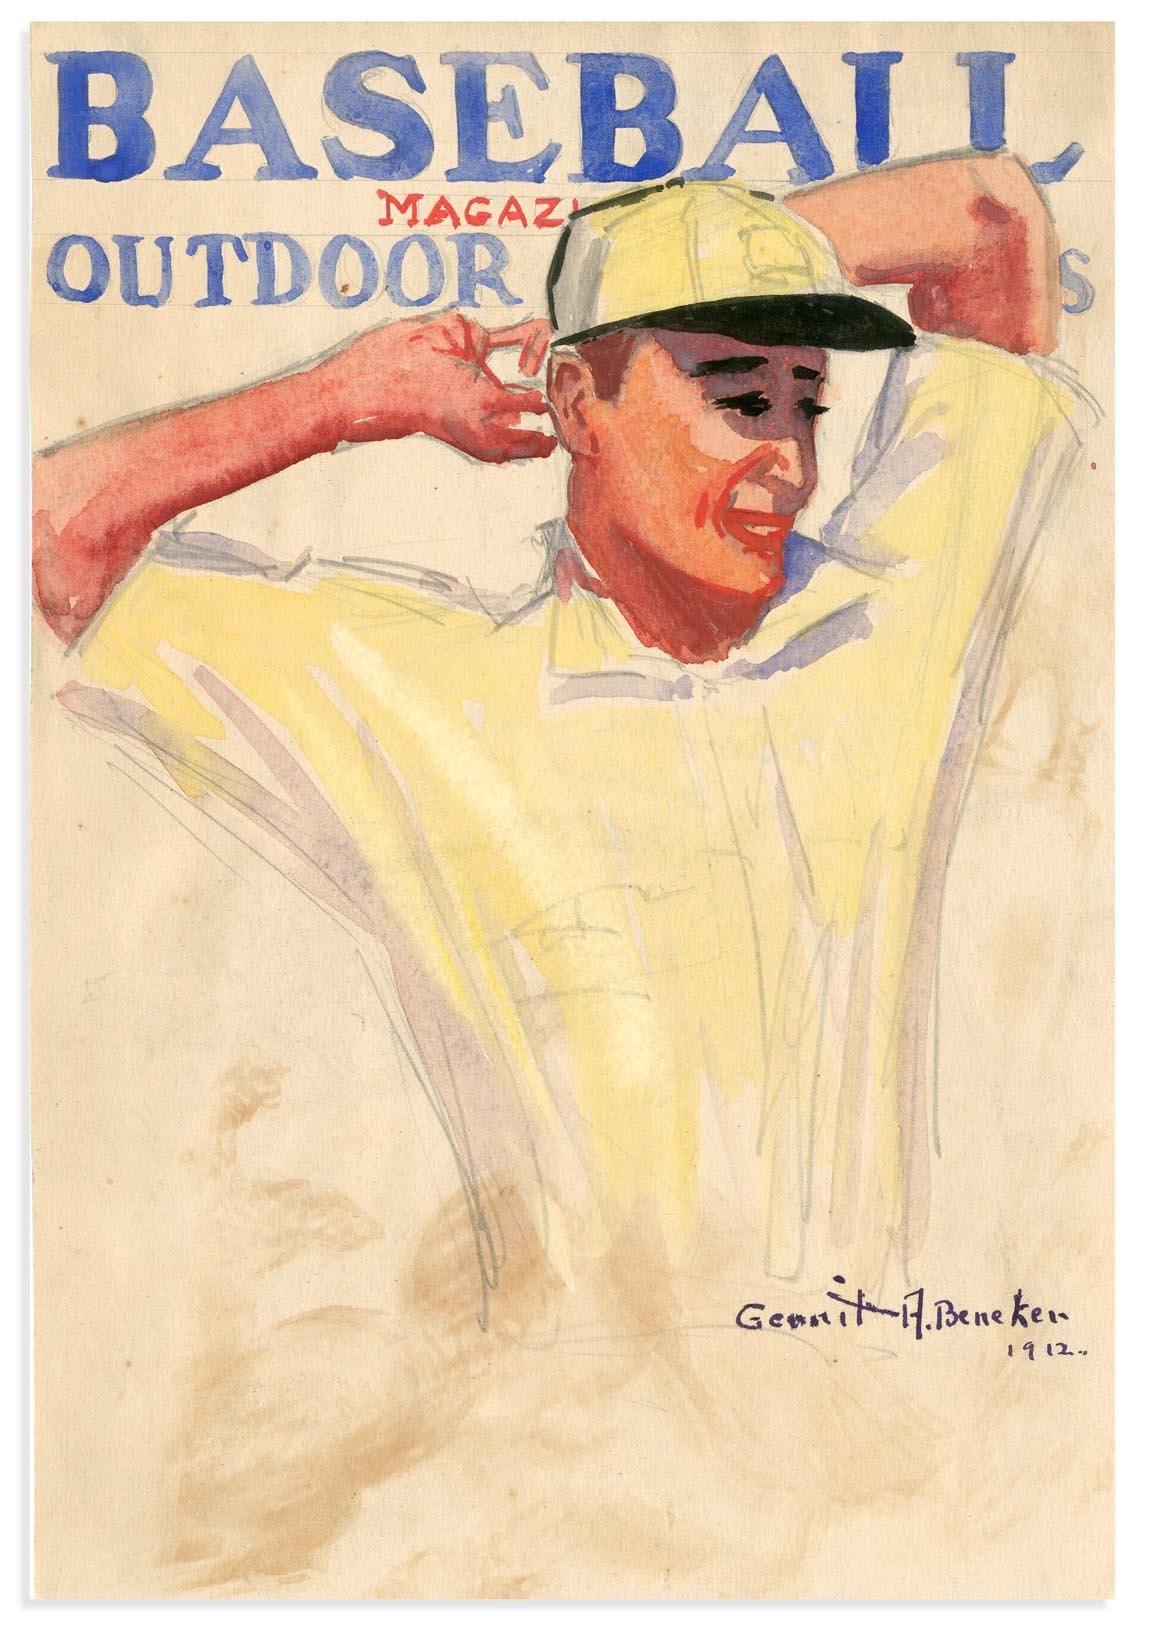 The Baseball Magazine Original Art - 1912/1925 "World Series Number" Baseball Magazine Cover Art Study by Gerrit Beneker (1882-1934)